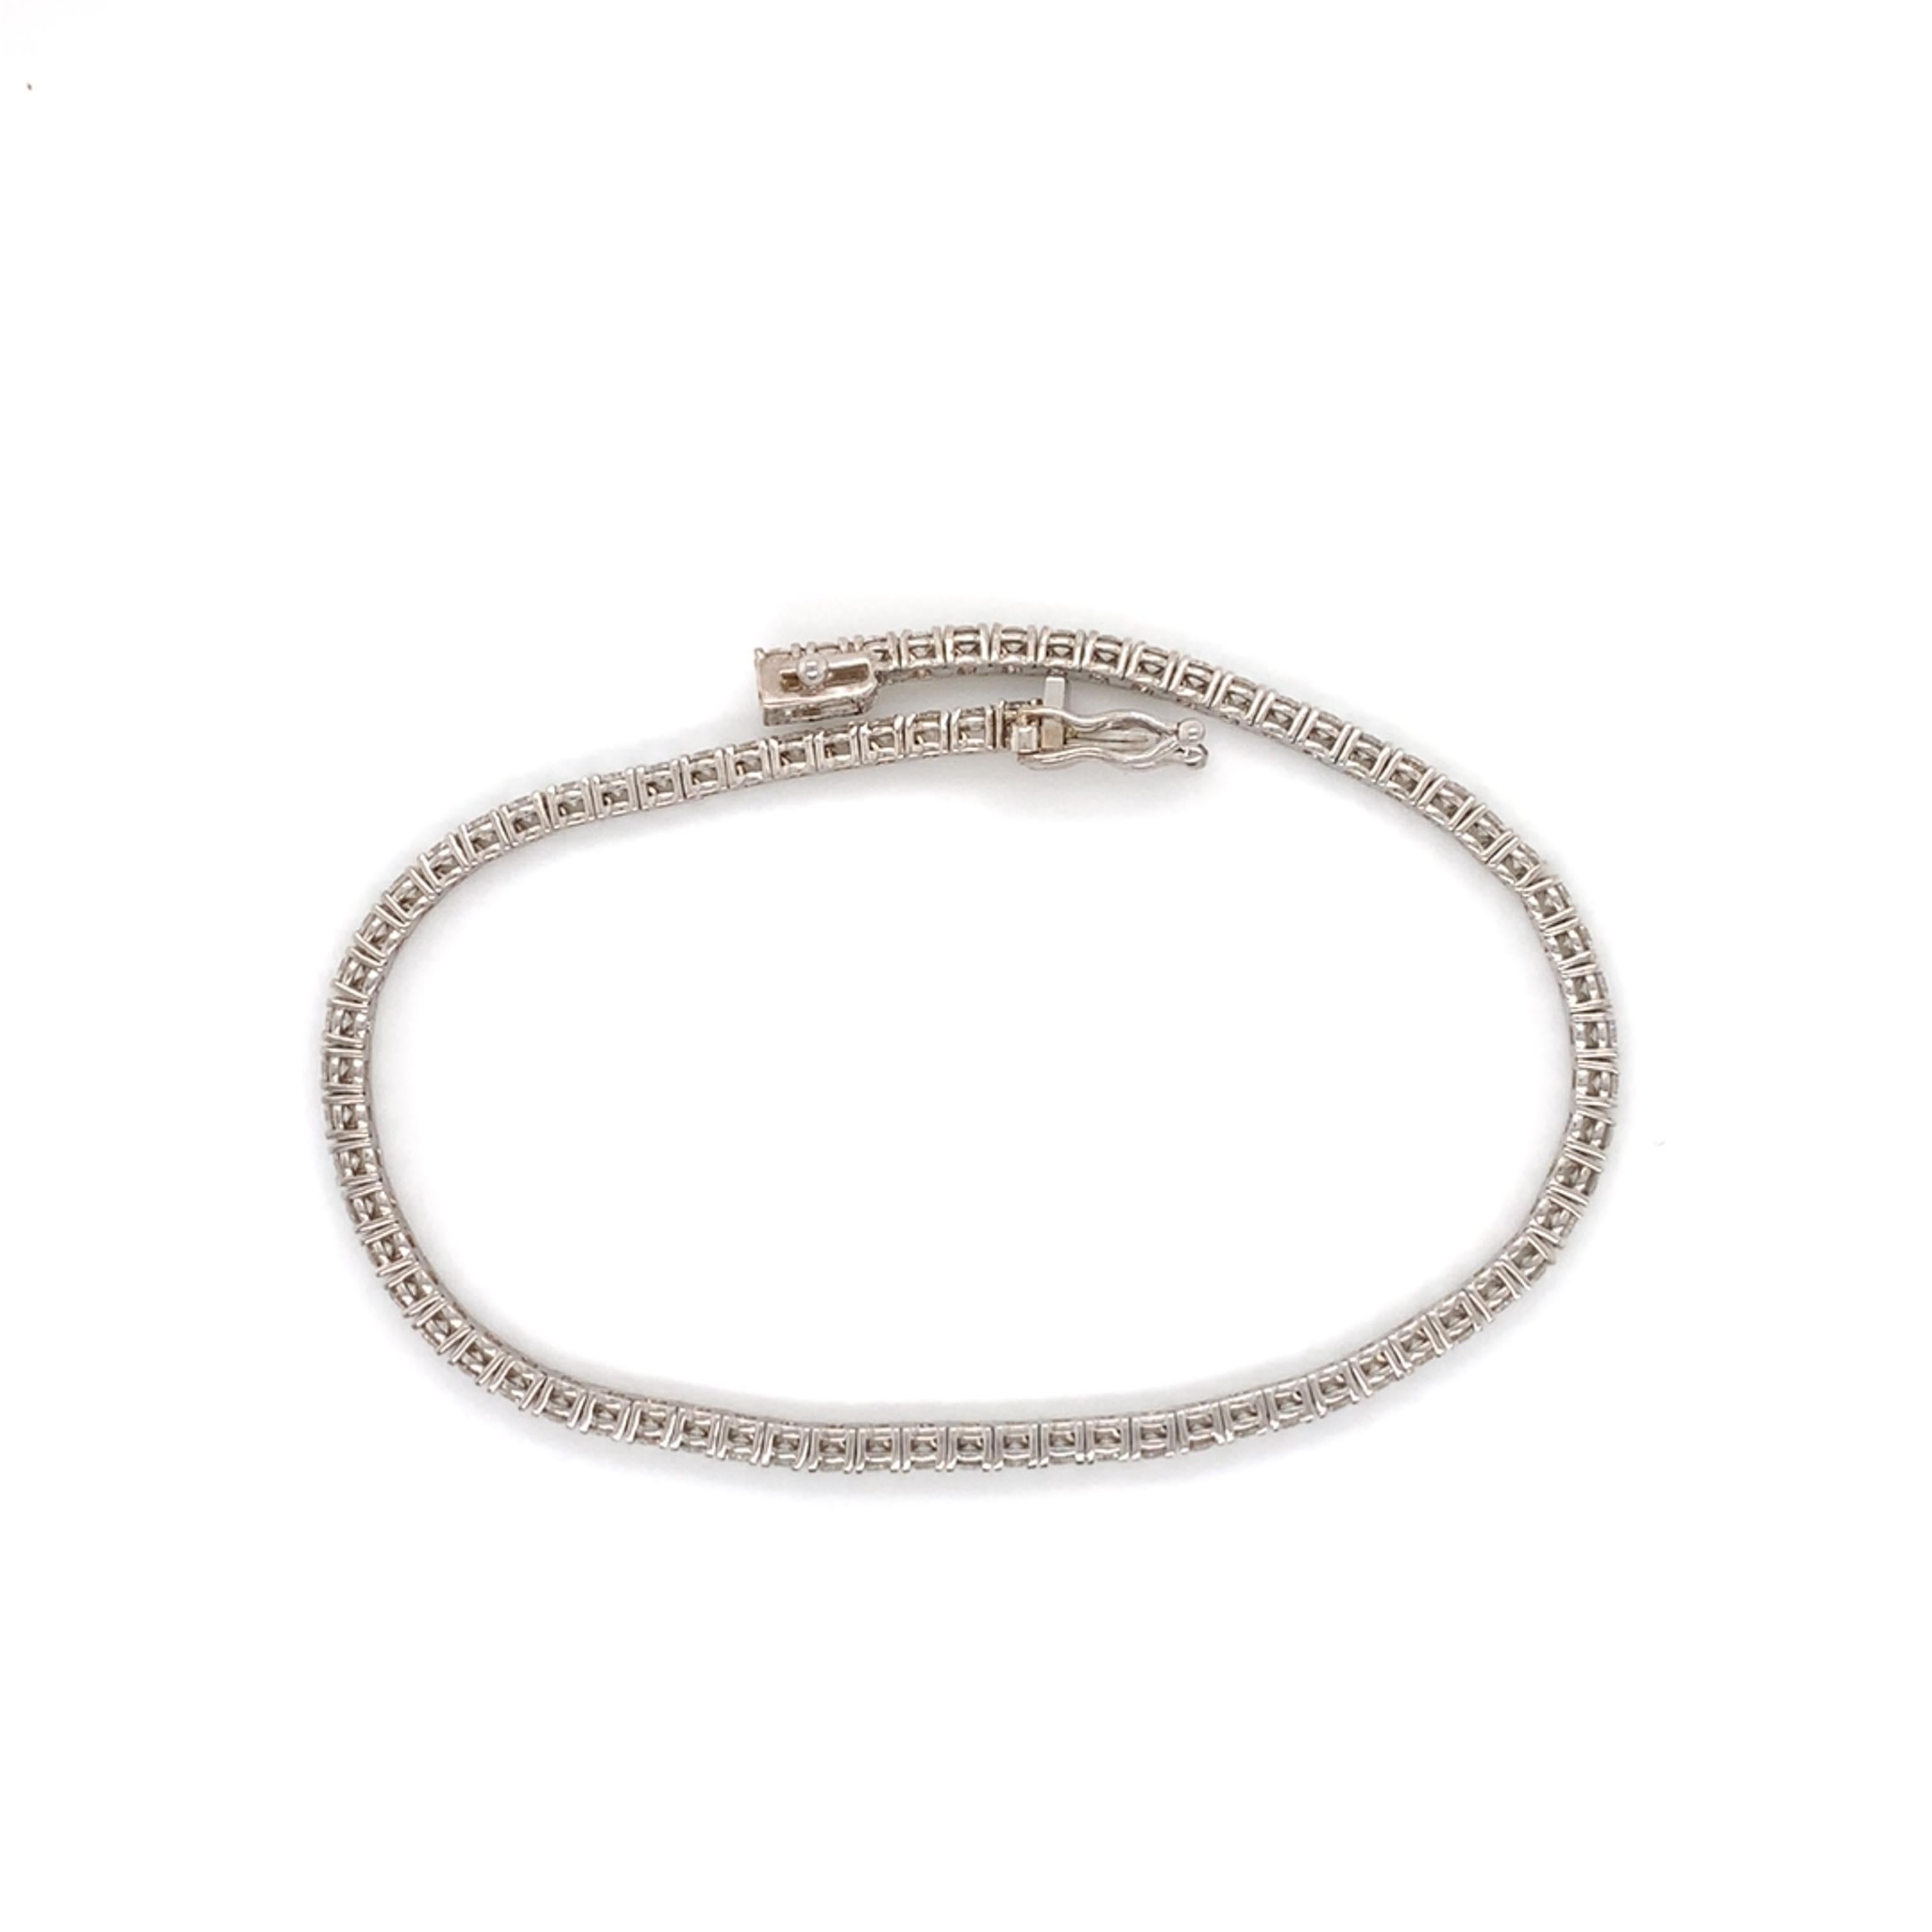 Medium sized diamond tennis/line bracelet made with real/natural diamonds. Total Diamond Weight: 2.46cts (brilliant cut diamonds). Diamond Quantity: 76. Mounted on 18kt white gold.